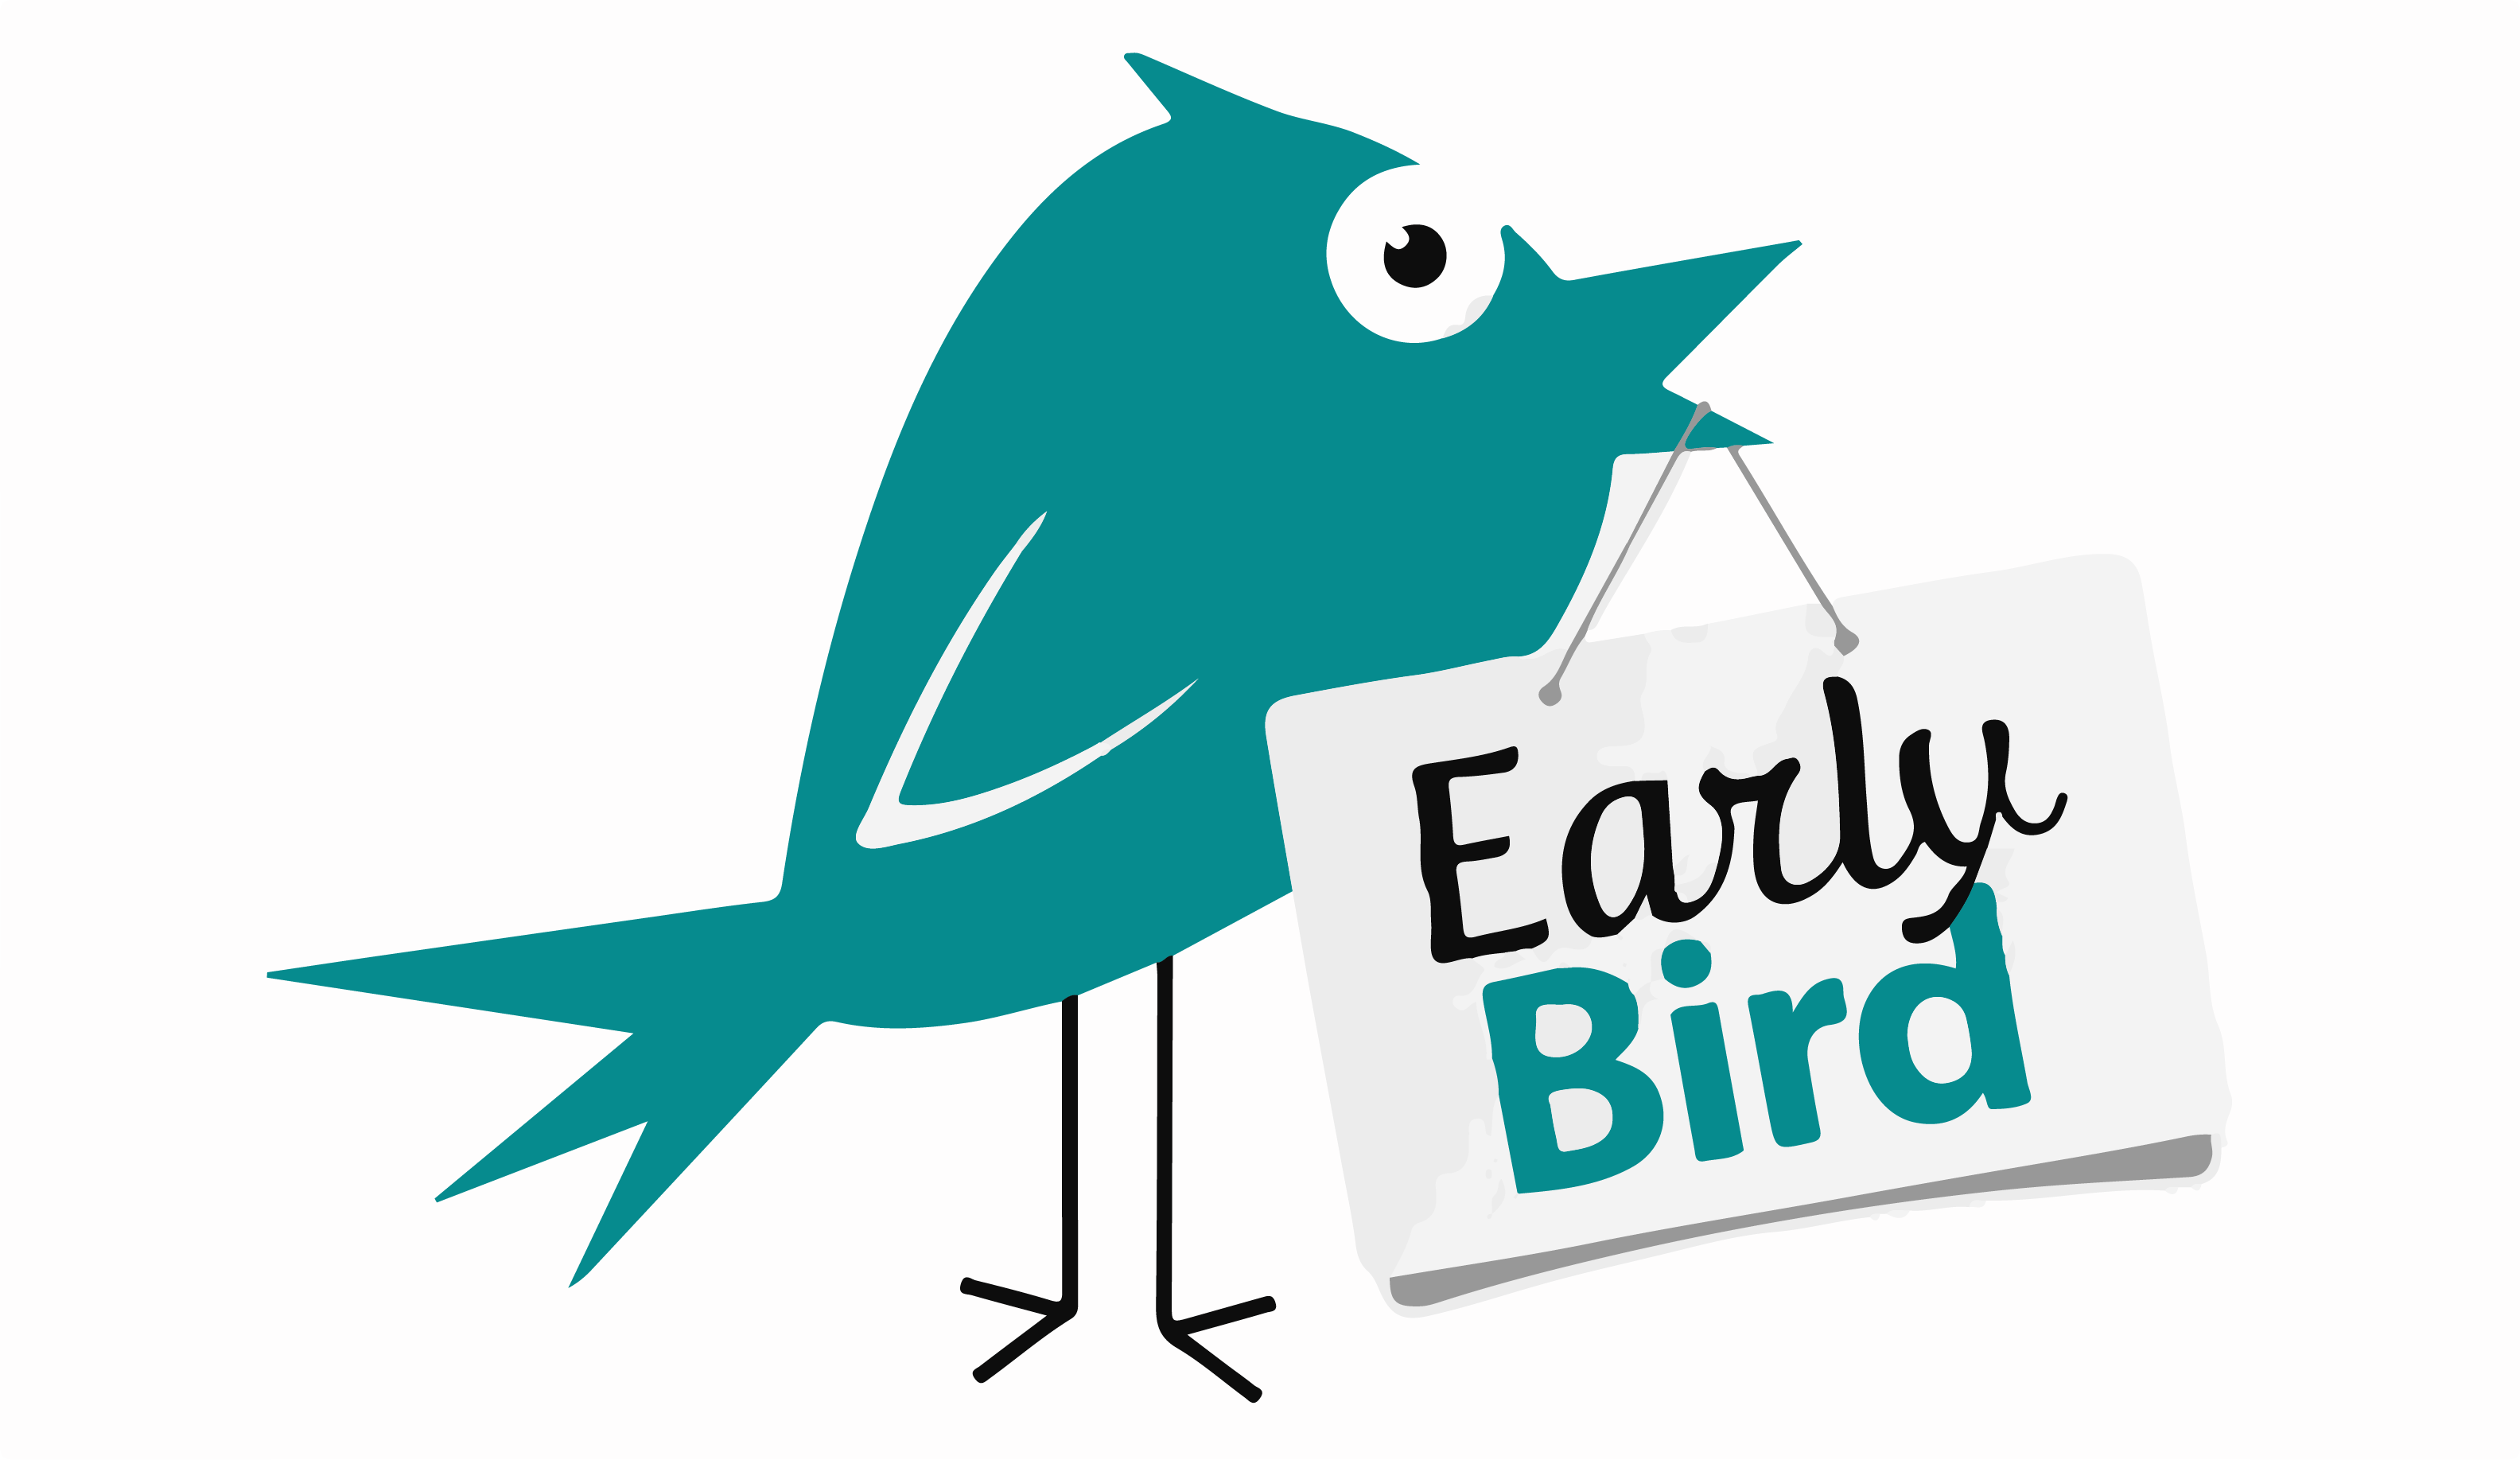 Bird цены. Early Bird. Картинка early. Early Bird offer. Early Bird венчурный фонд.